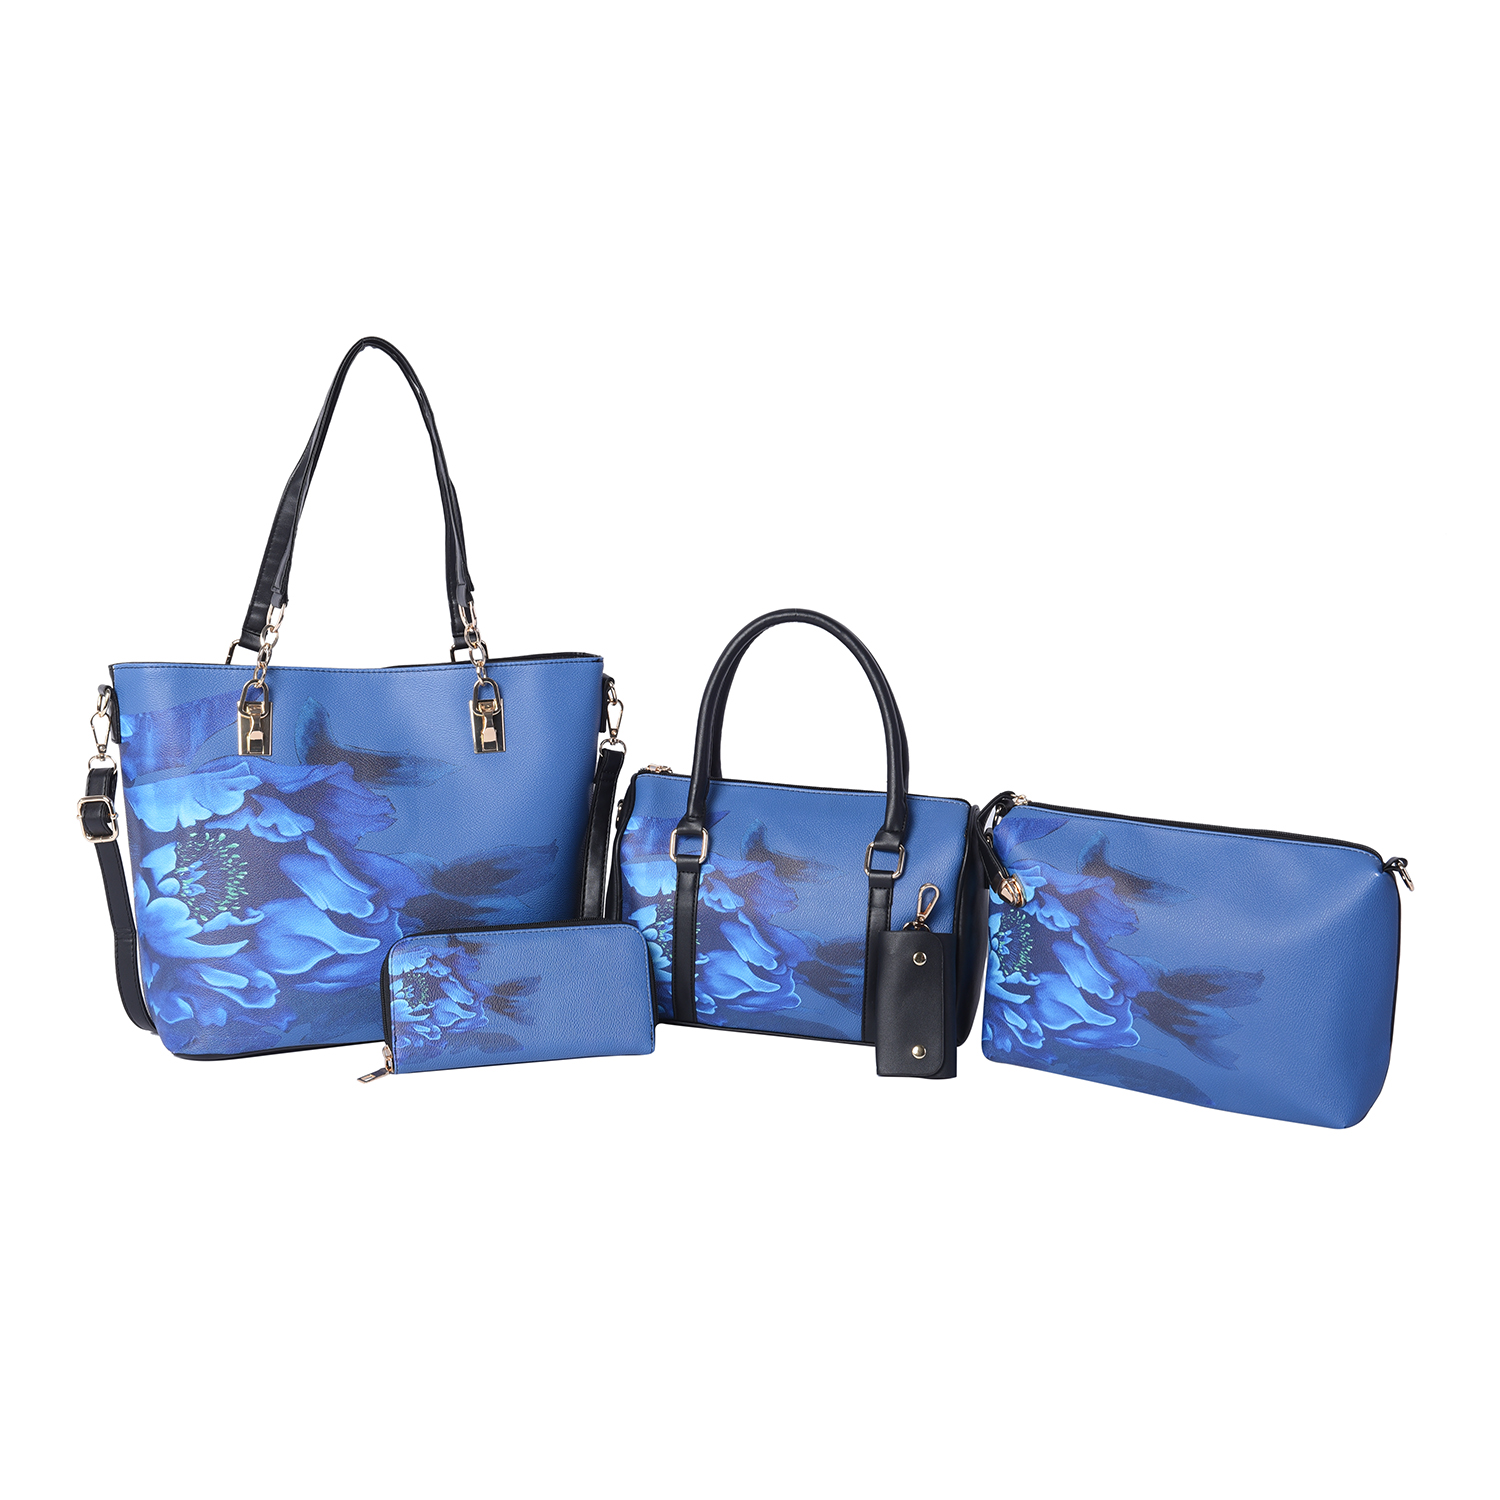 Set of 5 - Floral Pattern Tote Bag (29x12.5x30cm), Convertible Bag (27.5x13x19cm), Crossbody Bag (12.5x9x22cm), Wallet (19x2x10cm) & key Bag (6x10cm) - Navy Blue and Black